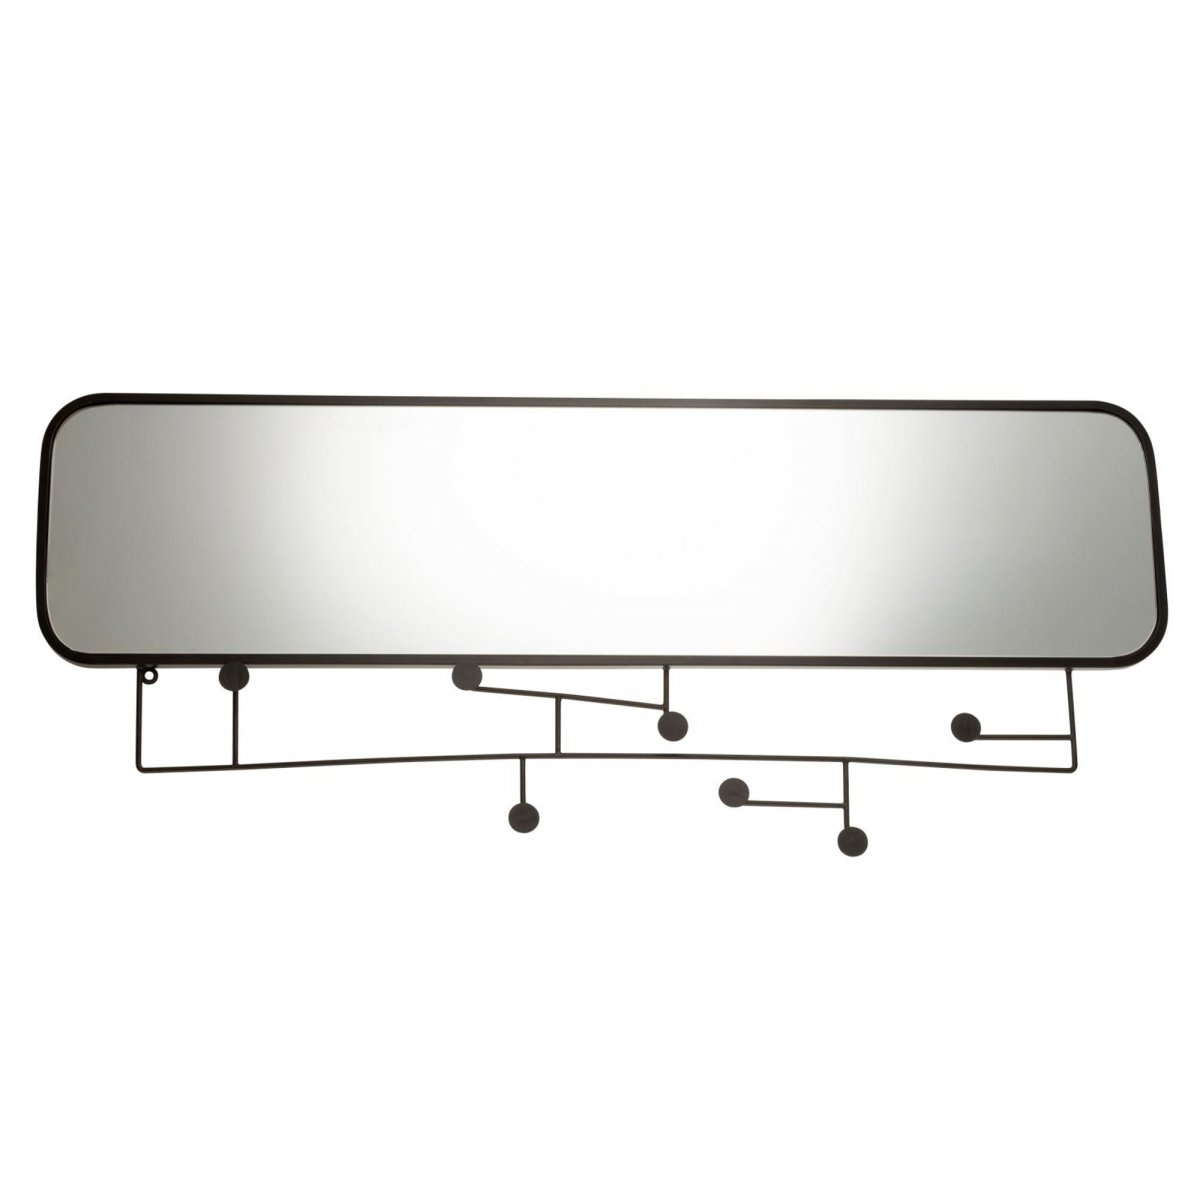 Grand miroir avec portants en métal noir 49x112cm